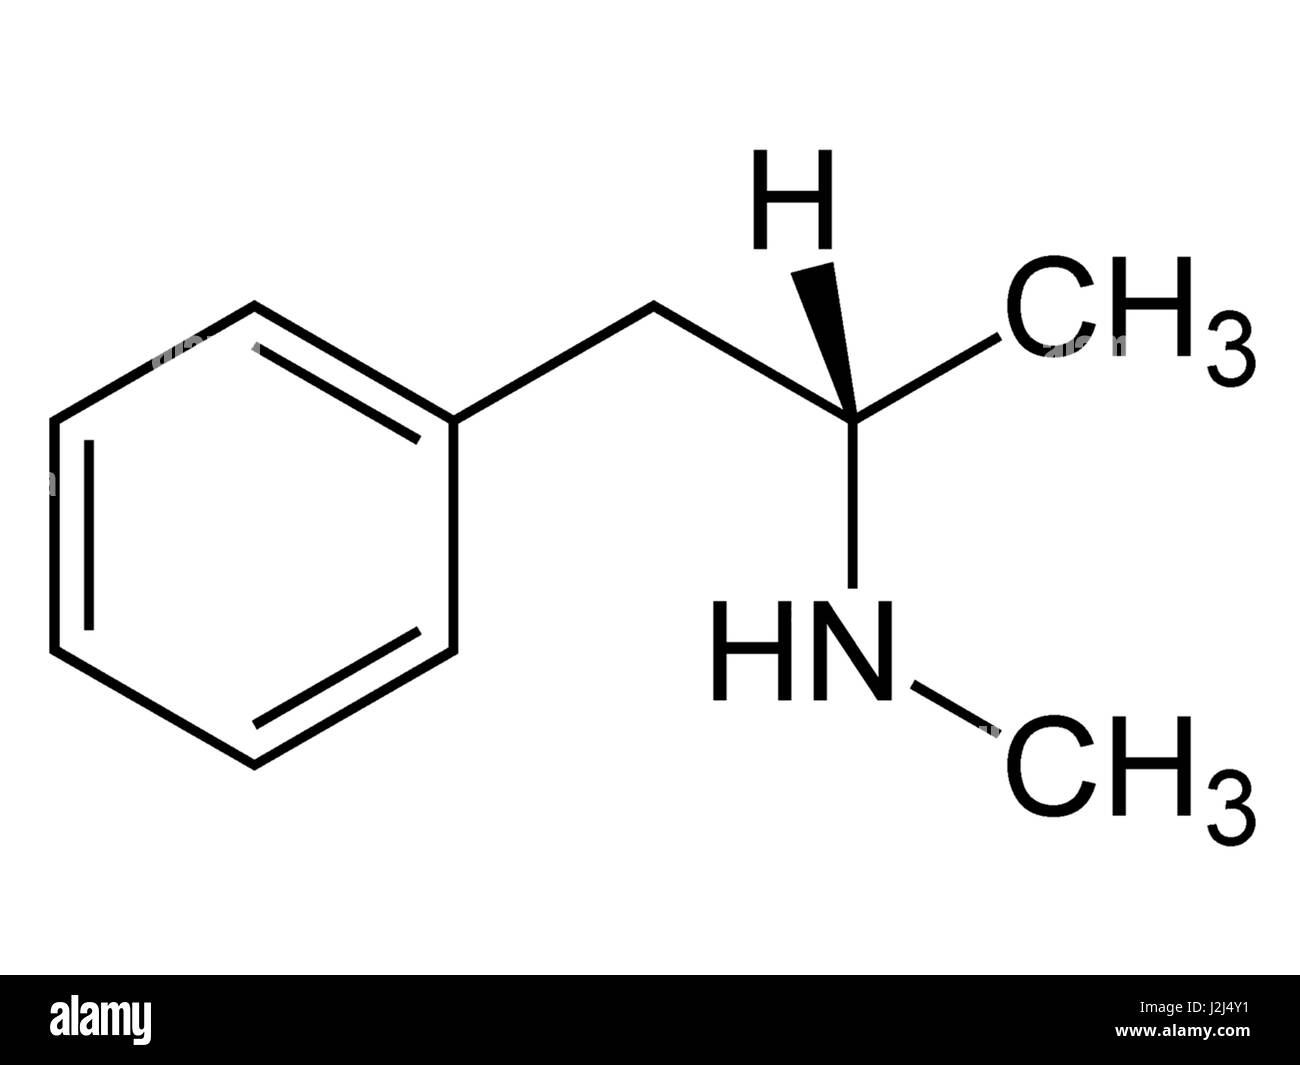 Structural formula of the methamphetamine crystal meth molecule. Stock Photo